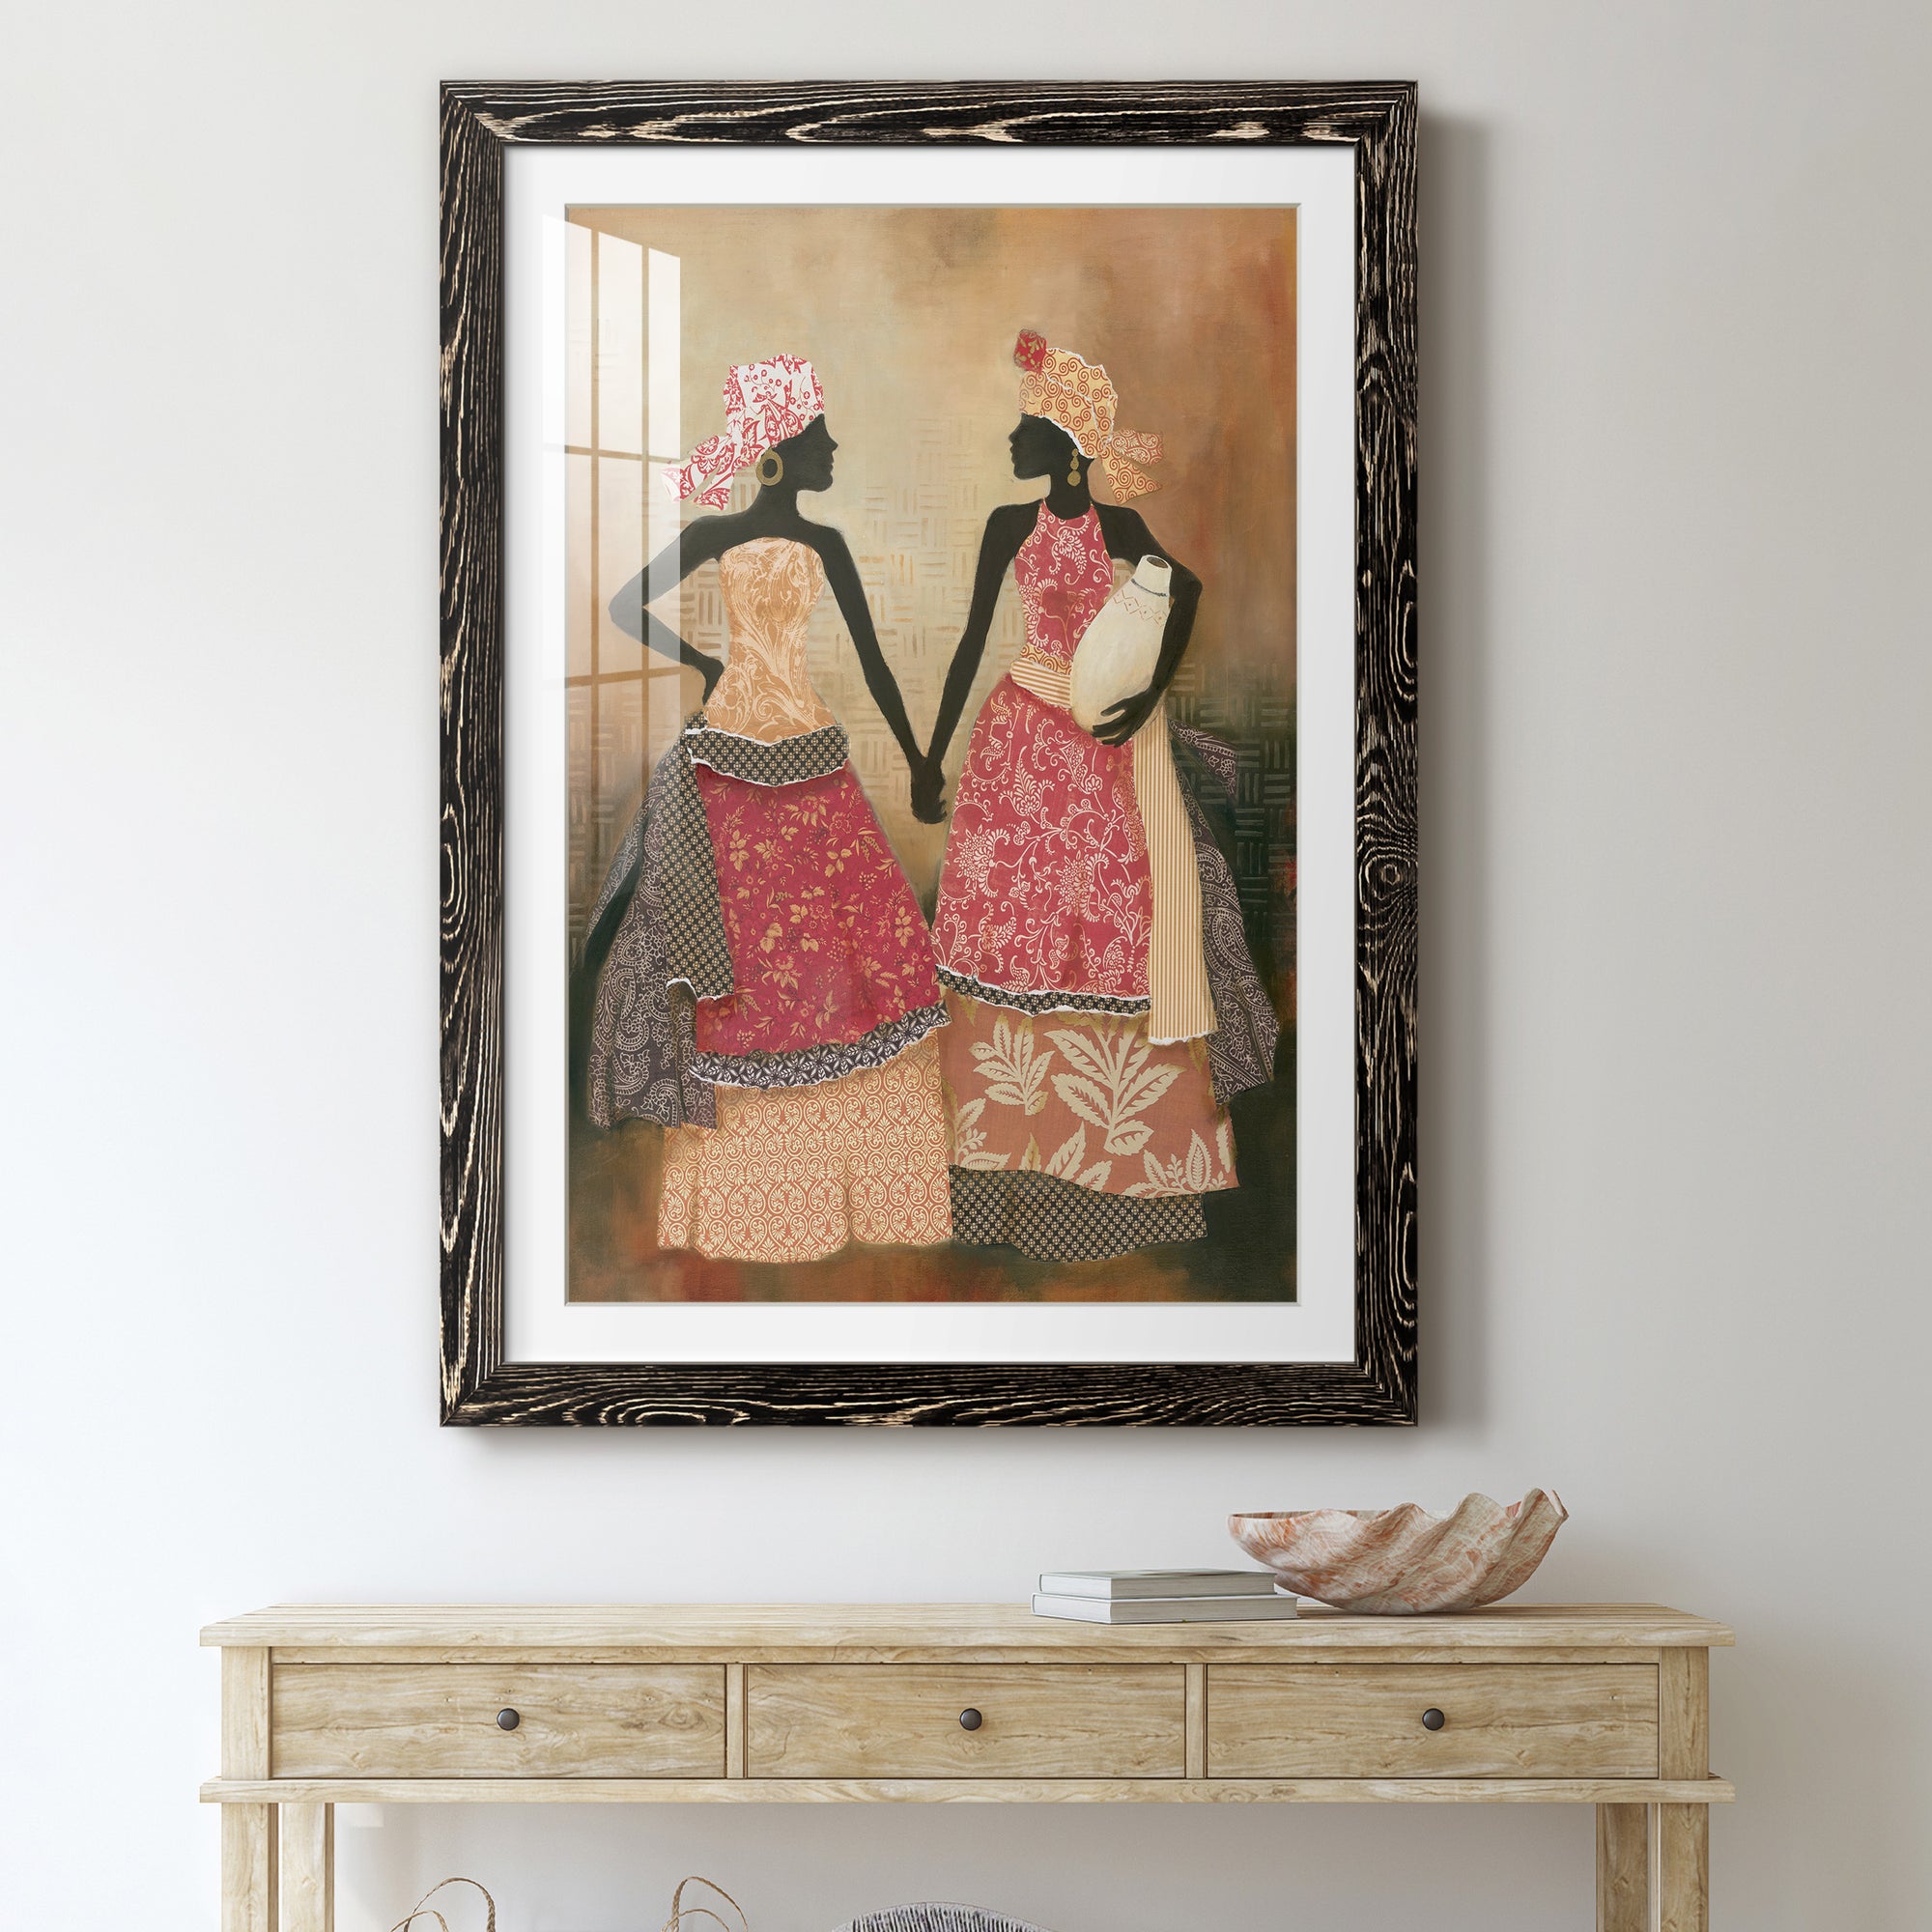 Village Women I - Premium Framed Print - Distressed Barnwood Frame - Ready to Hang